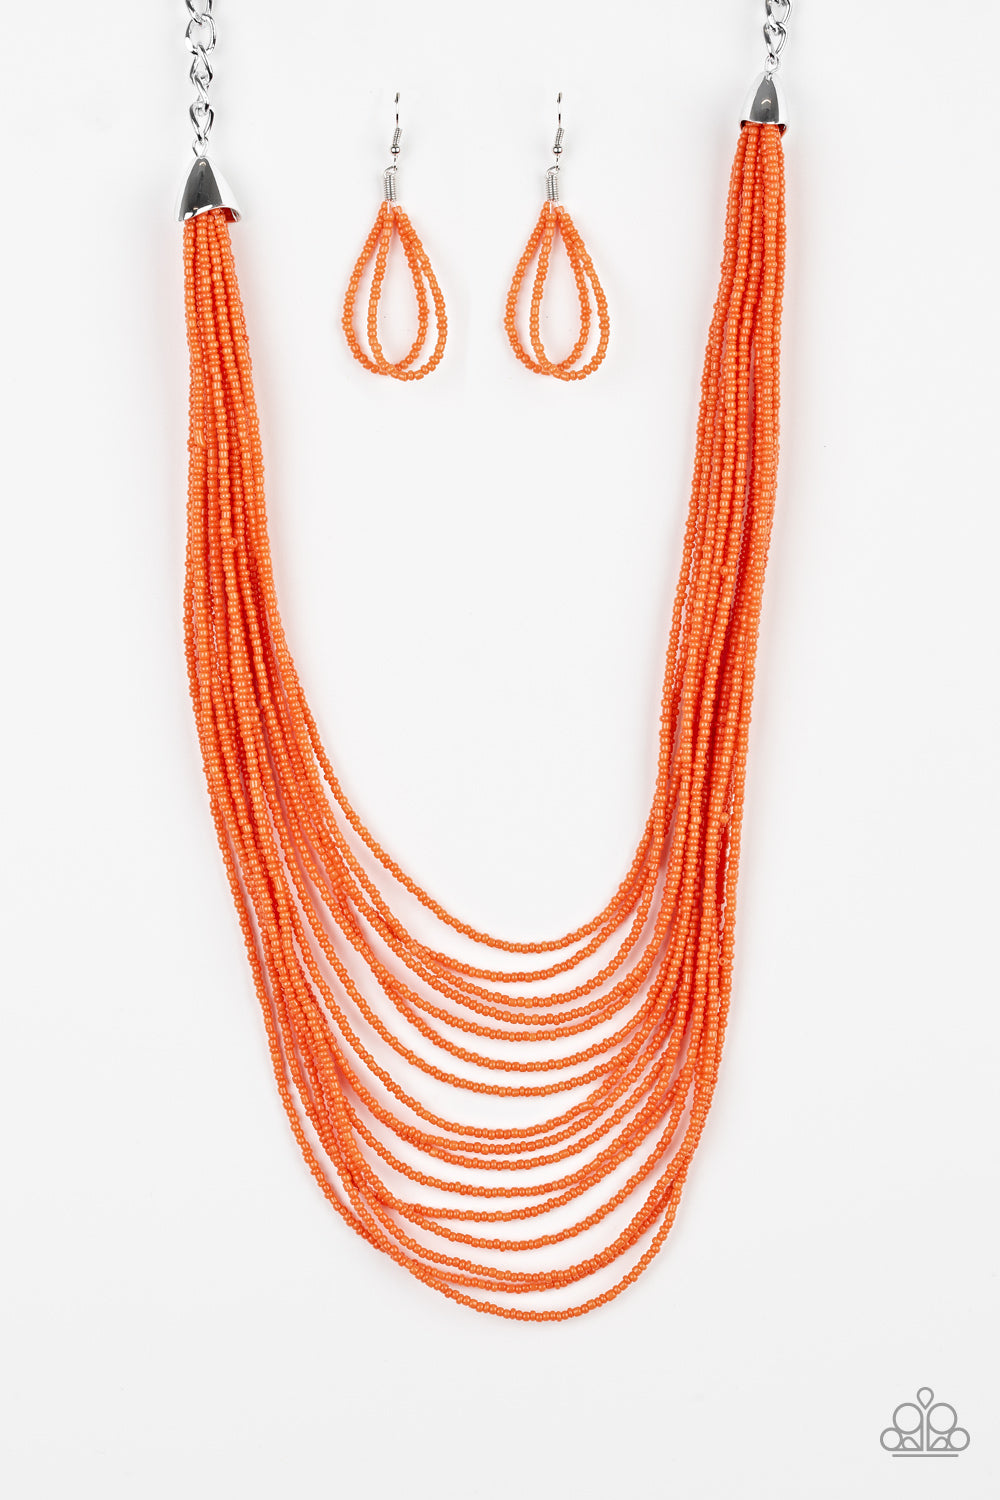 Peacefully Pacific Orange Paparazzi Necklaces Cashmere Pink Jewels - Cashmere Pink Jewels & Accessories, Cashmere Pink Jewels & Accessories - Paparazzi